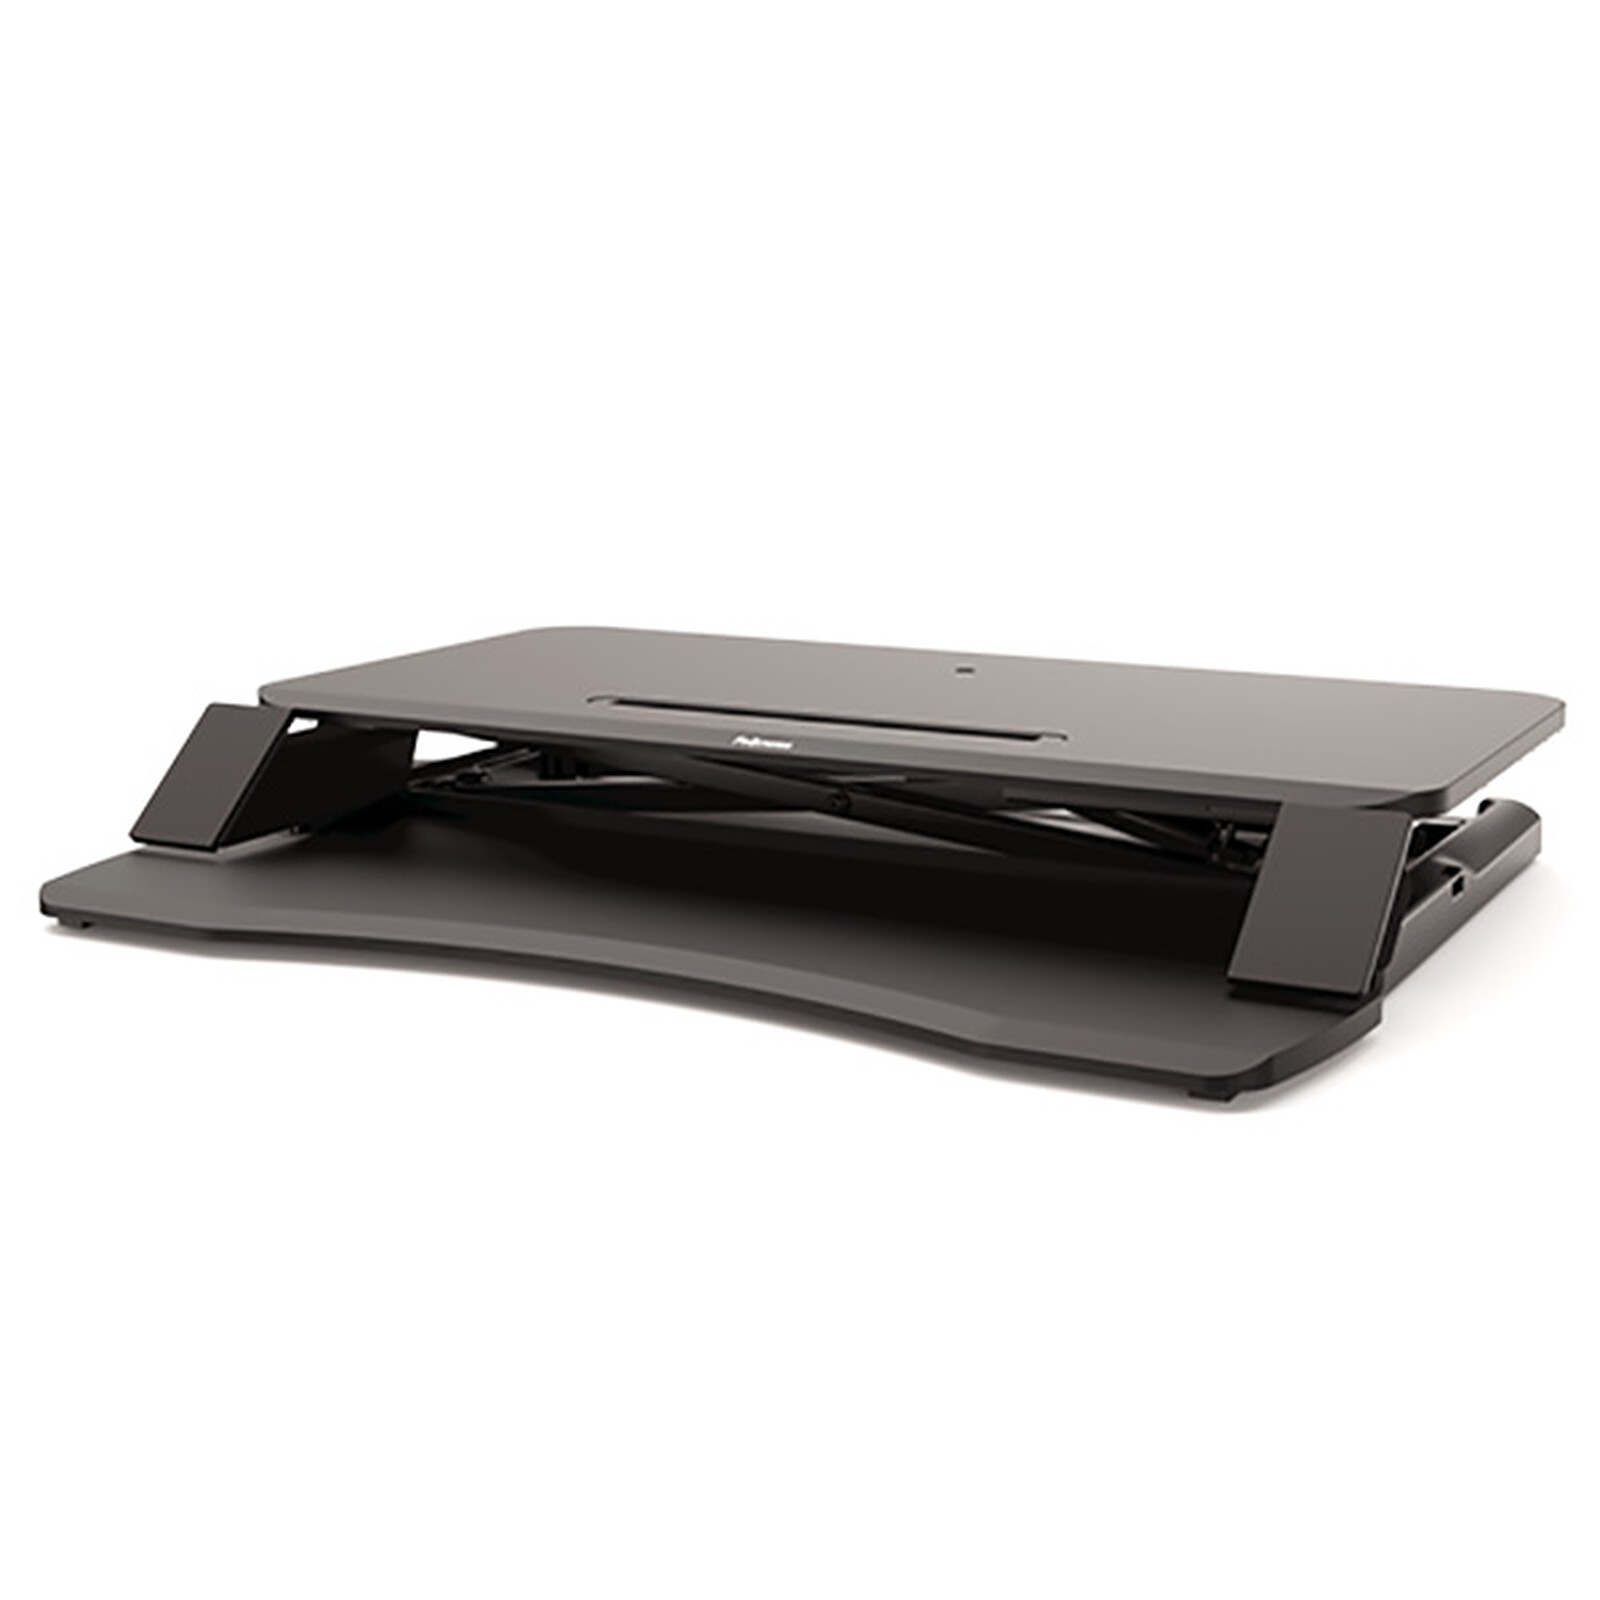 FELLOWES tiroir clavier + tablette souris graphite